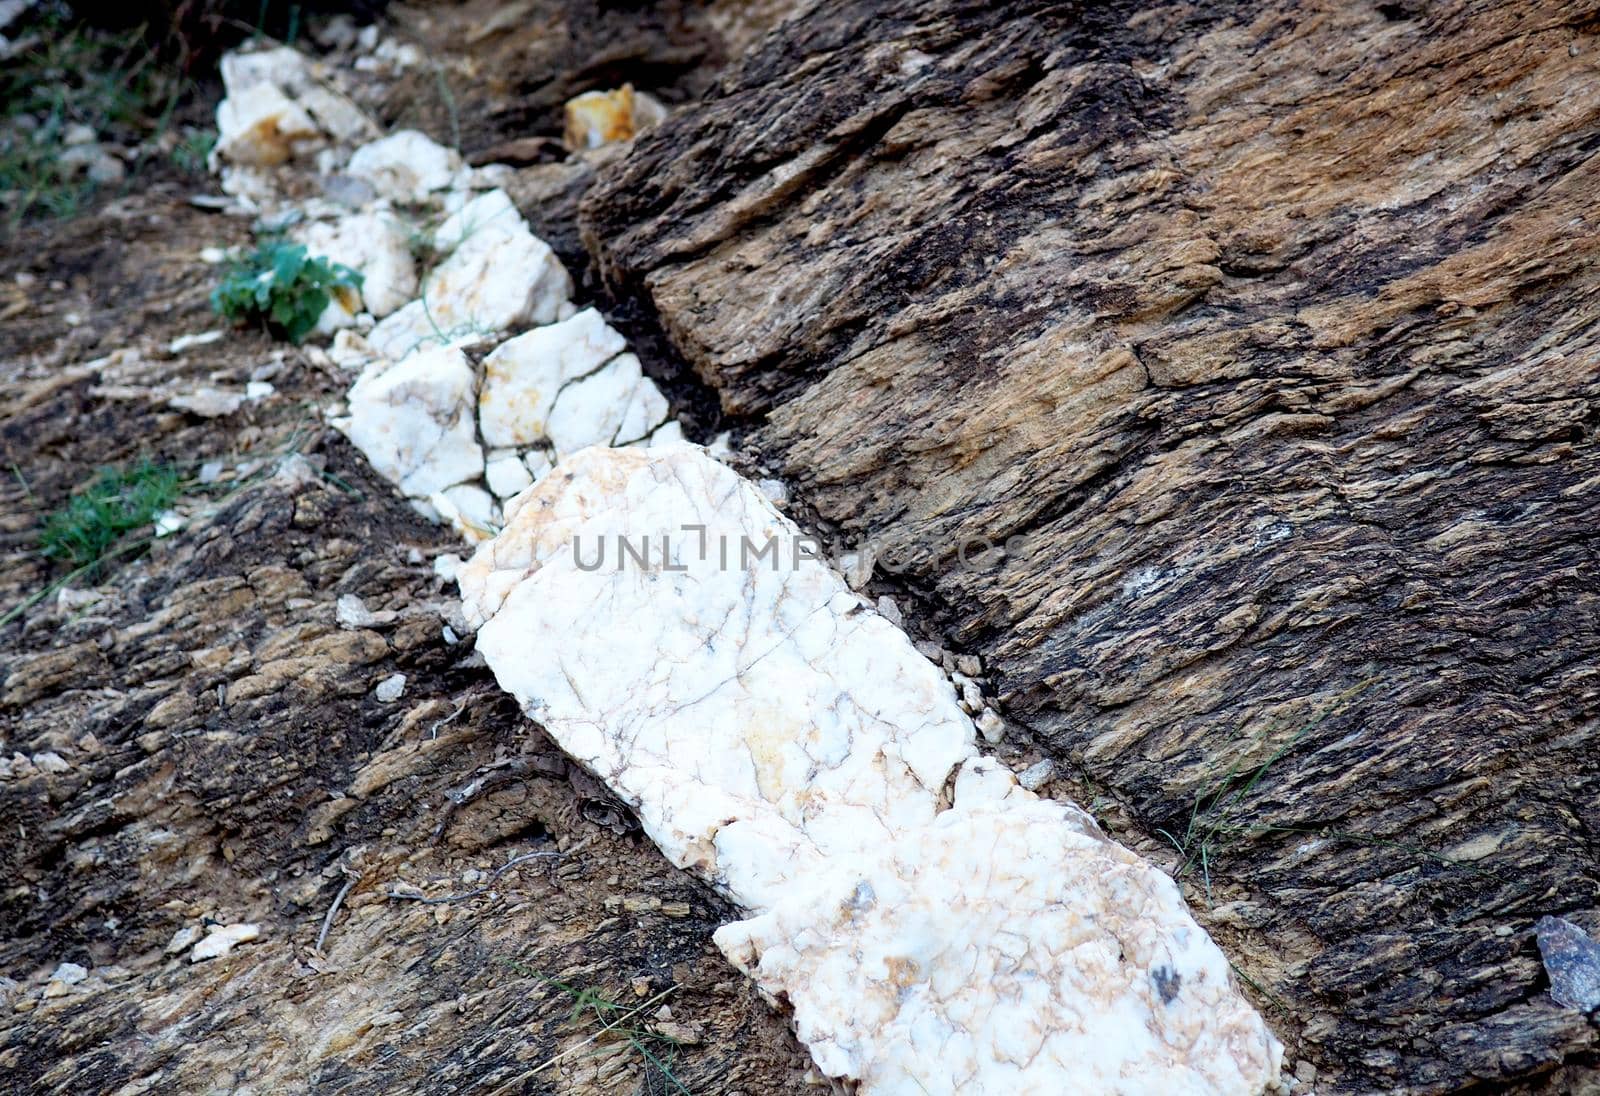 Seam of quartz in sedimentary sandstone rock by fivepointsix